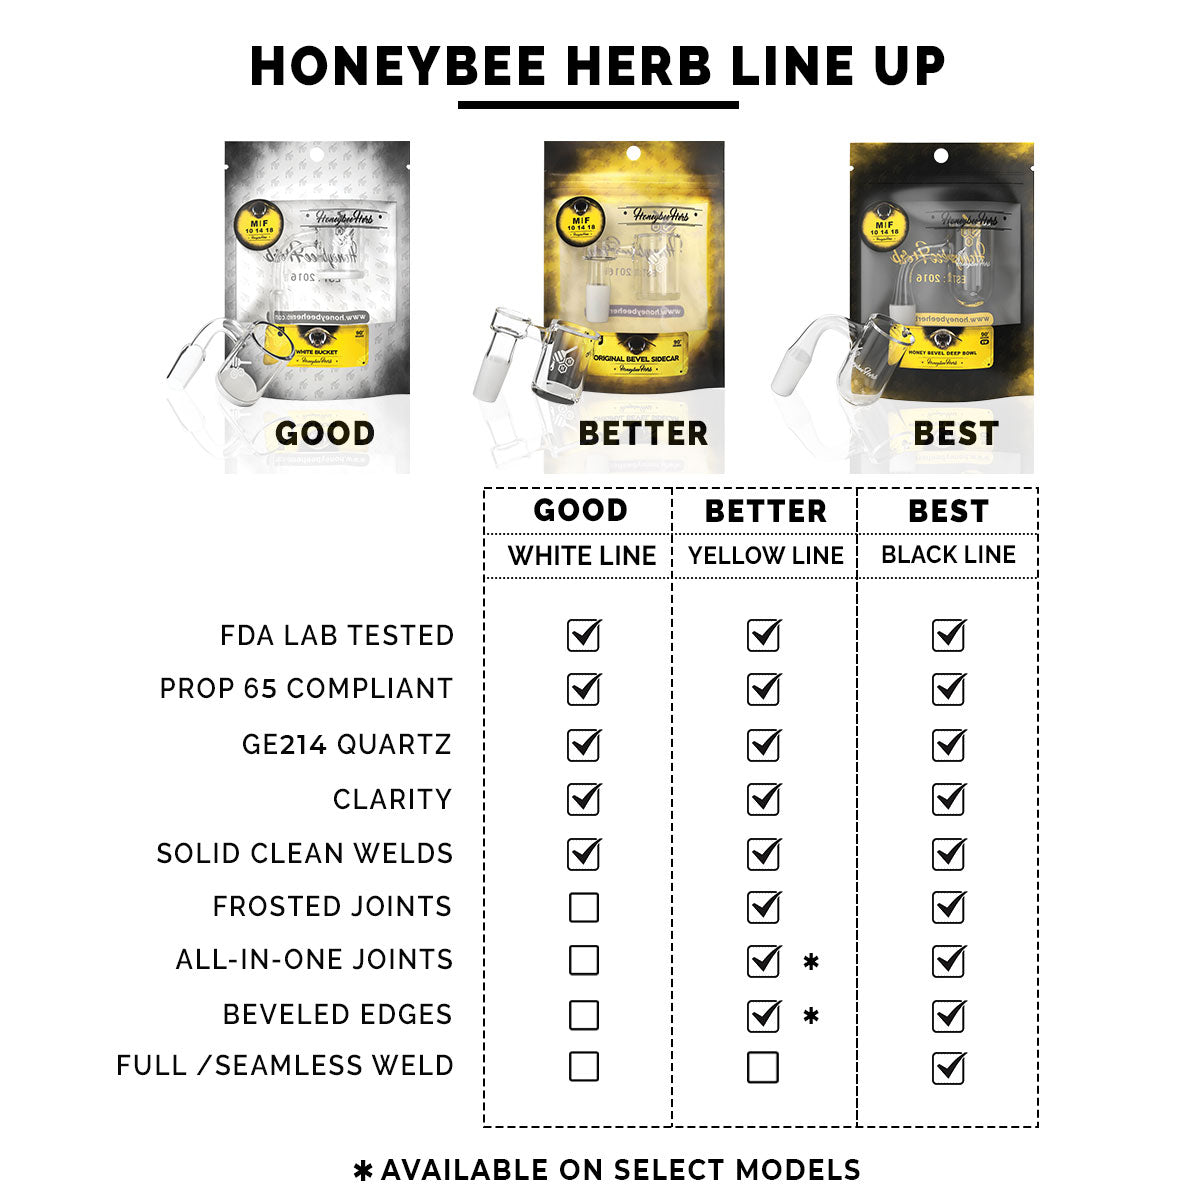 Honeybee Herb quartz banger lineup chart comparing features of Good, Better, Best quality bangers